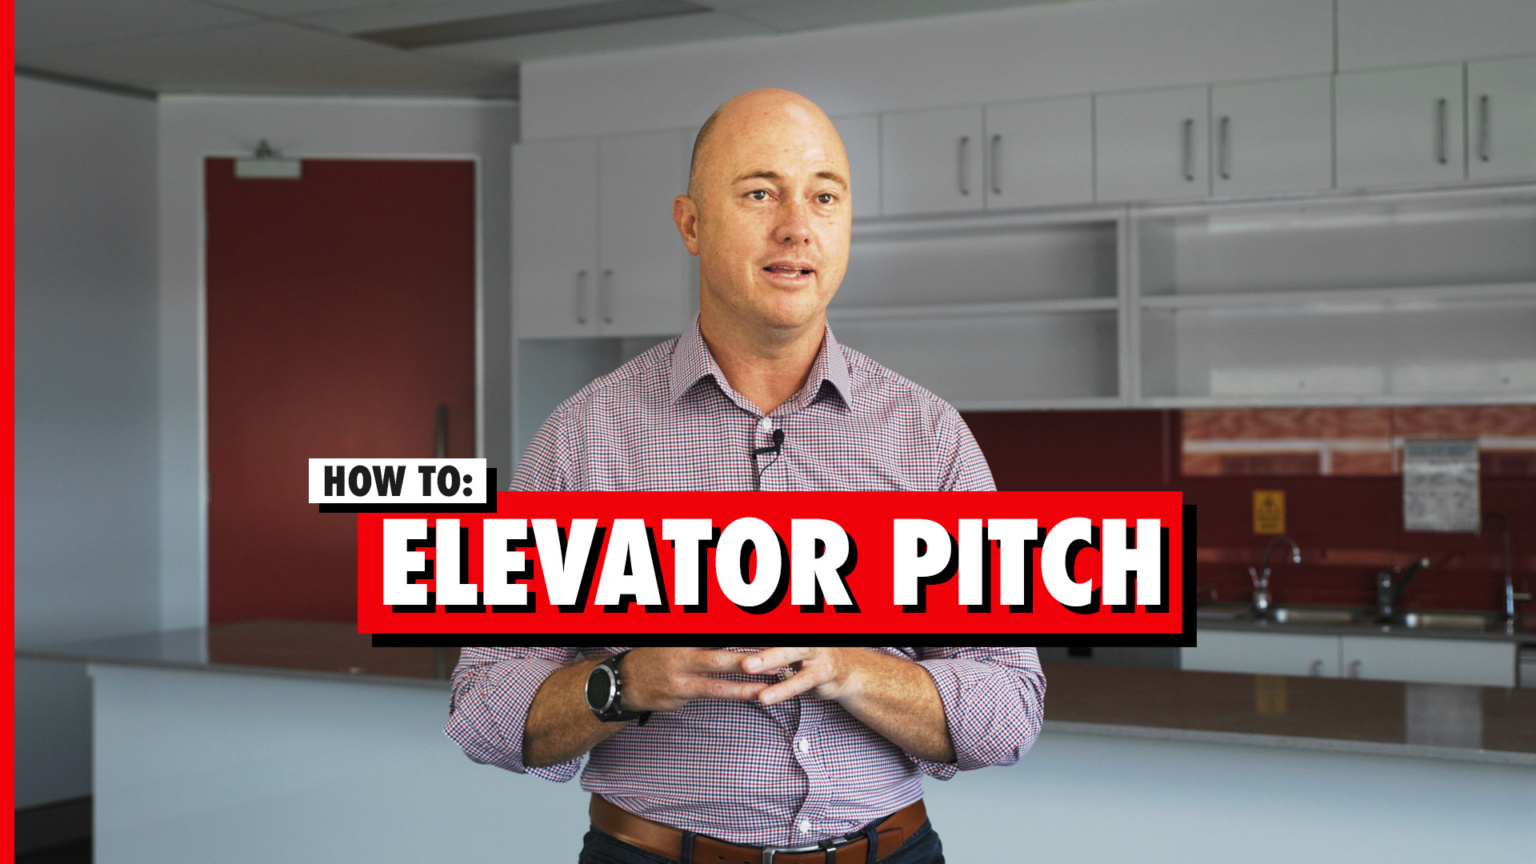 Trevor Ambrose Public Speaking Sales Training How To Elevator Pitch Blog Thumbnail